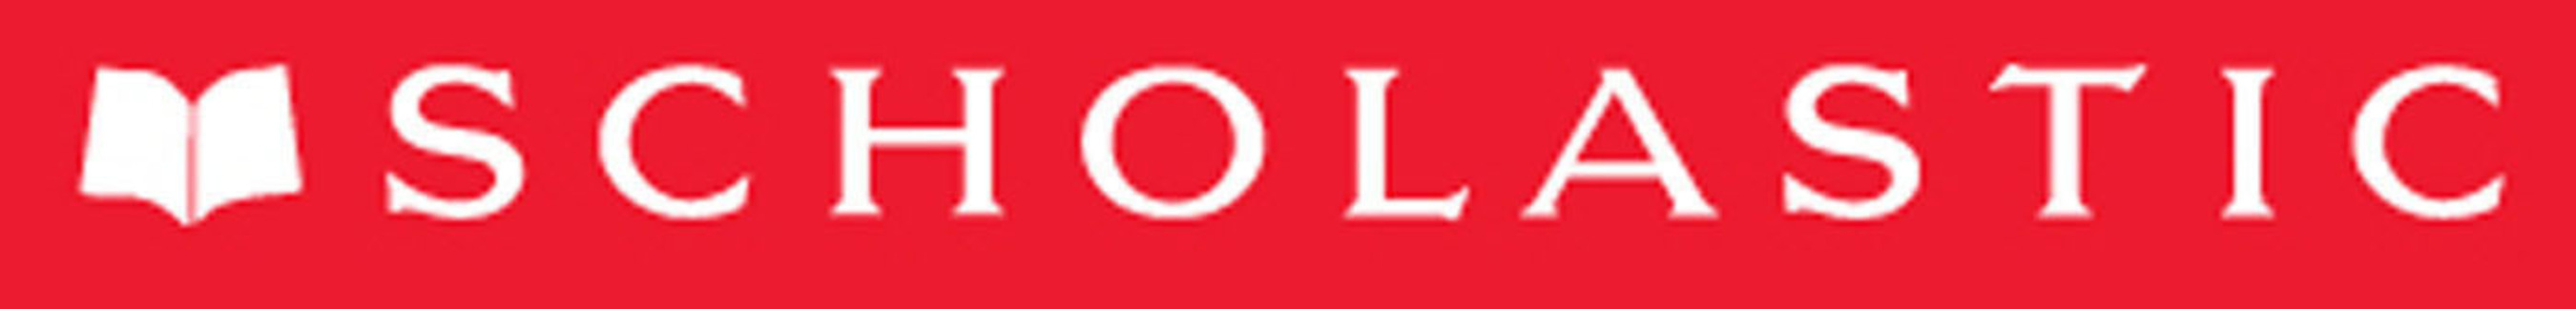 Scholastic Logo. (PRNewsFoto/Scholastic) (PRNewsFoto/SCHOLASTIC)